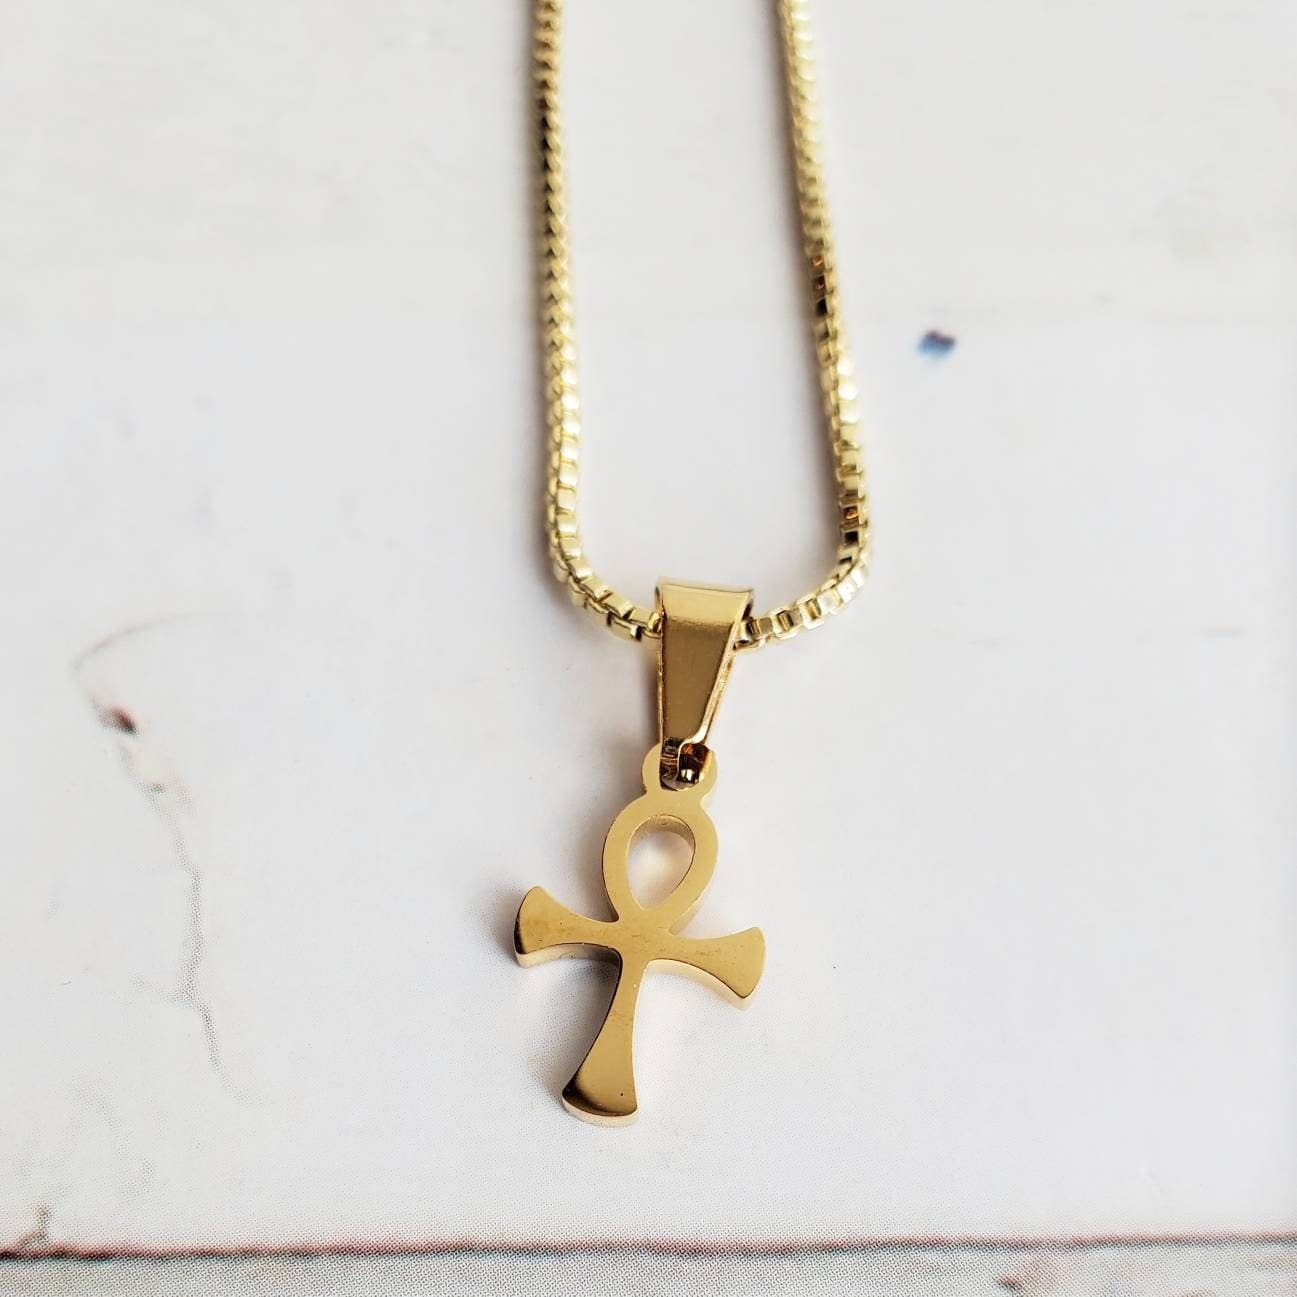 ANKH | 14K Gold Box Chain Necklace | Delicate Ankh Pendant Necklace | Couples Necklace | Fertility Goddess Pendant | Egyptian Cross Jewelry